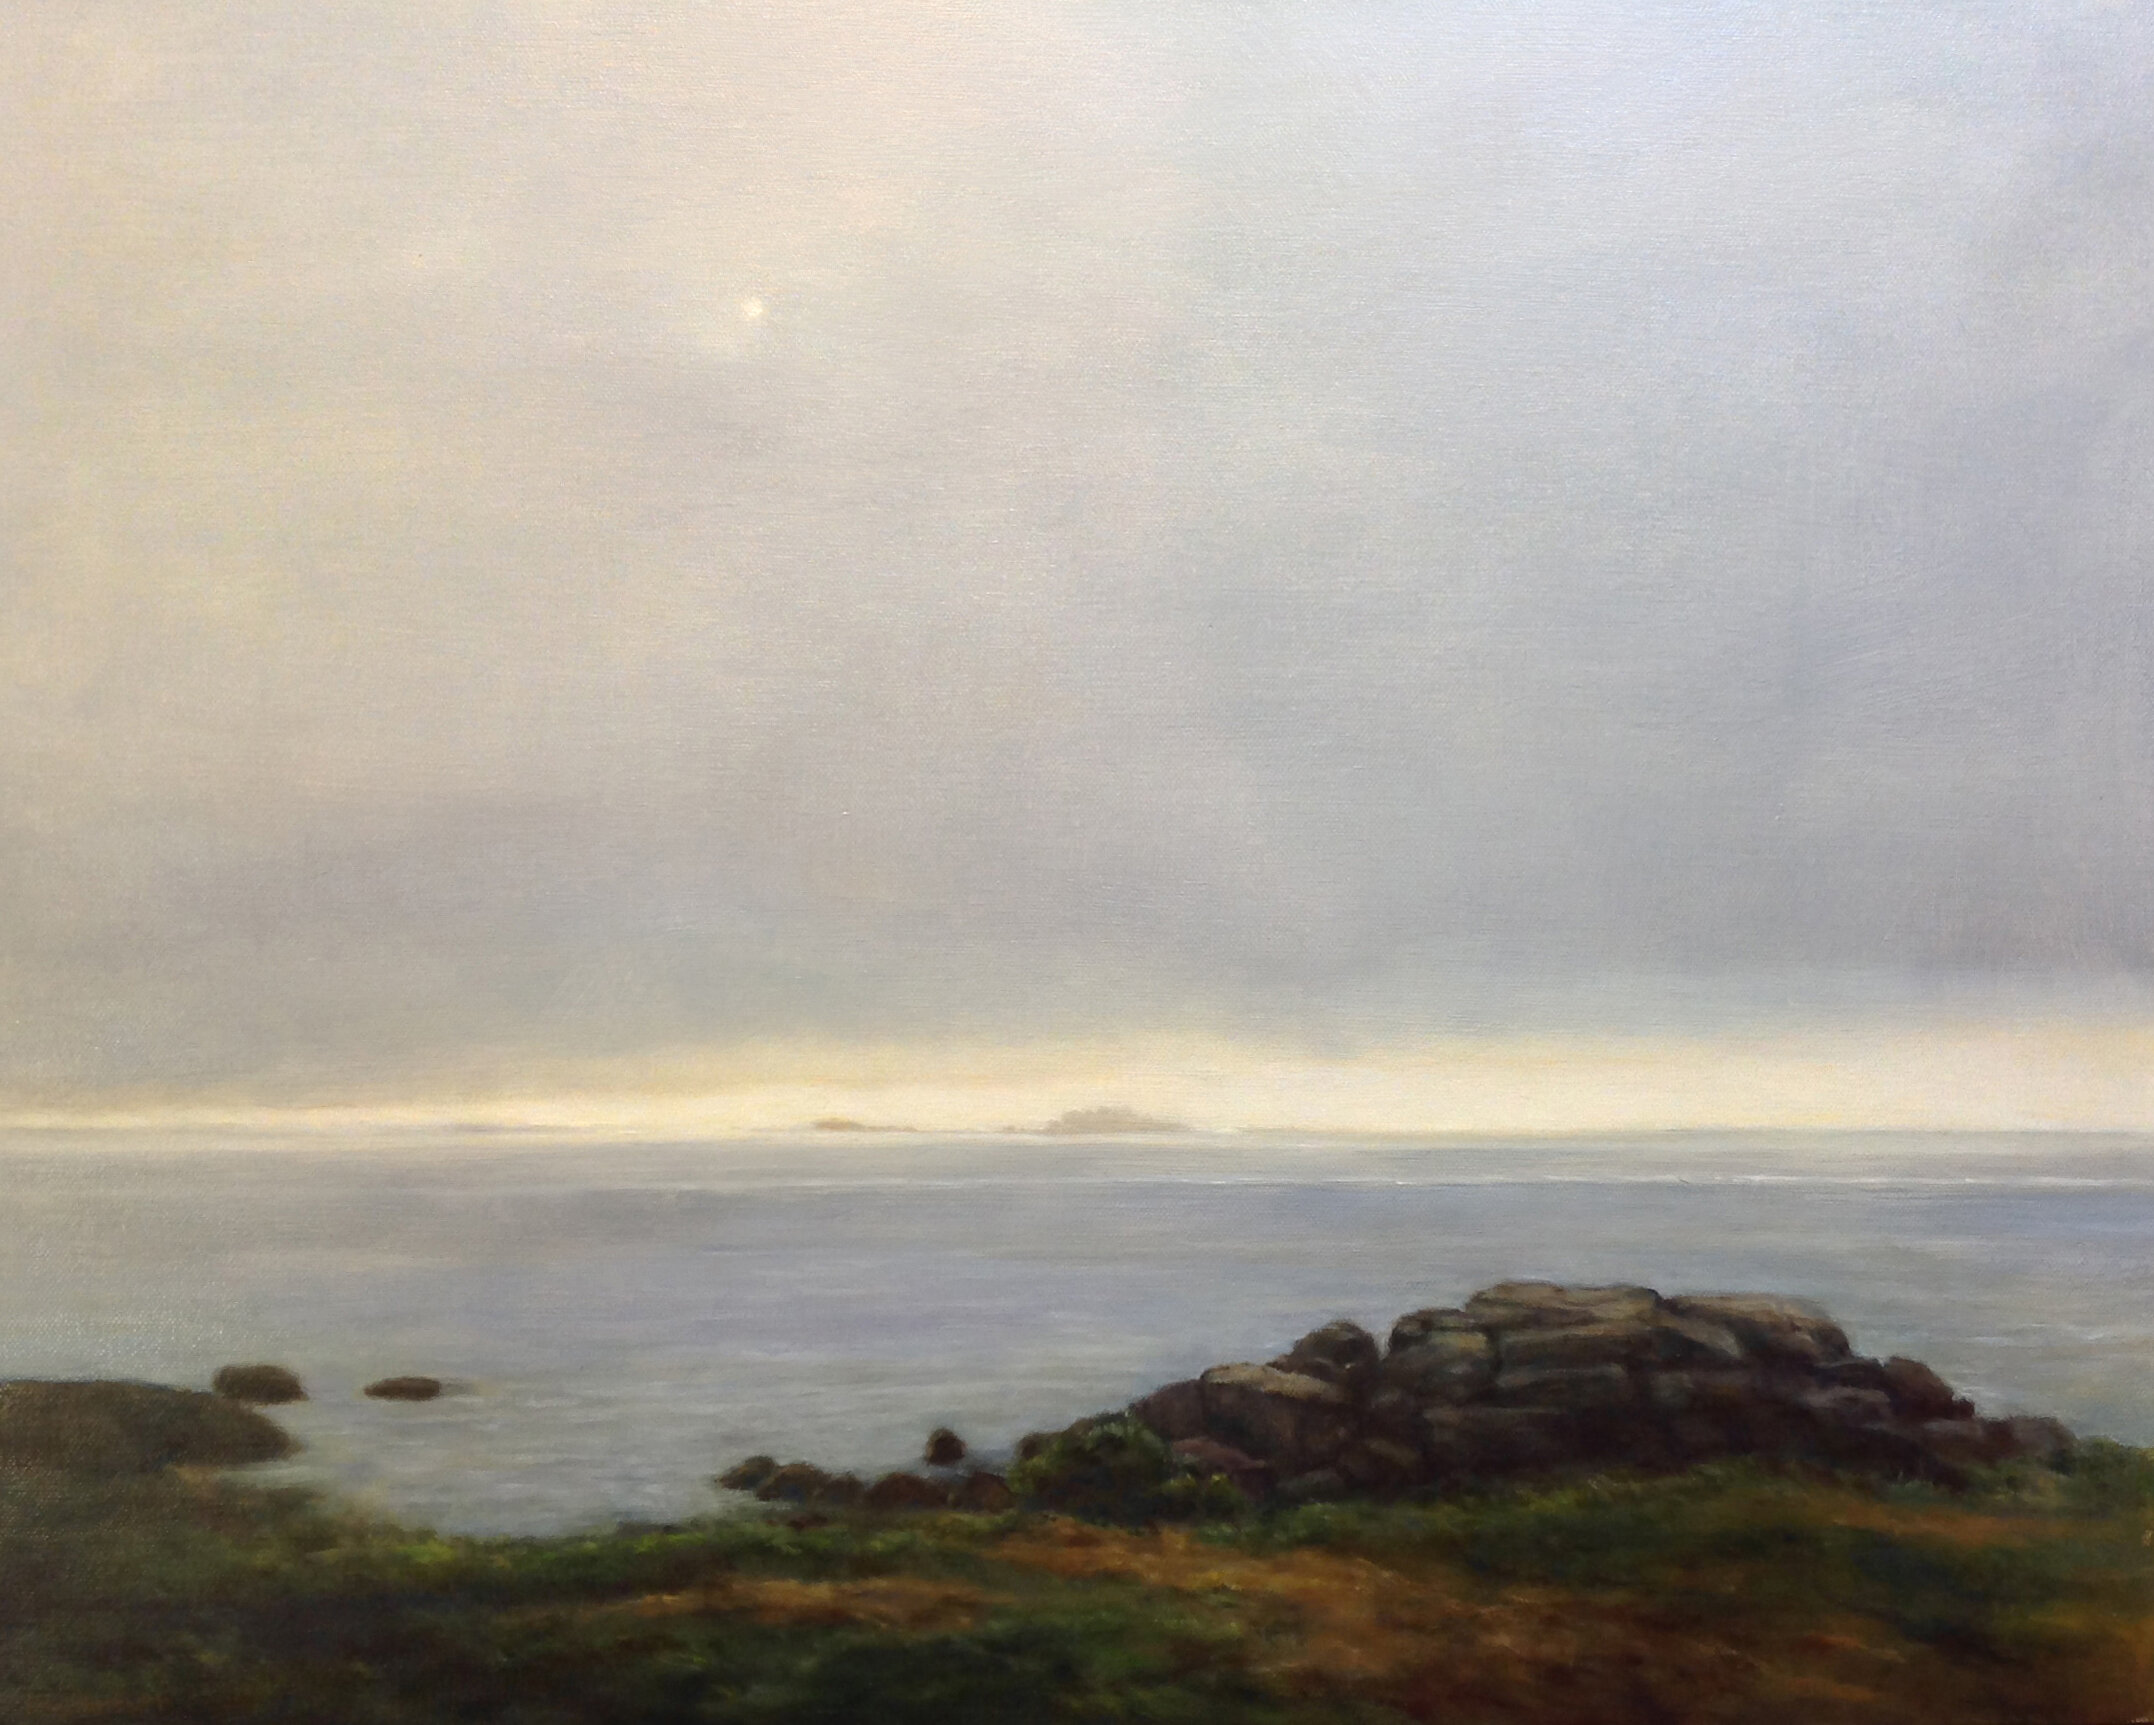  Mary Lou Schempf  Morning Fog, Corea, Maine,  16” x 20”, oil on canvas  (available)  